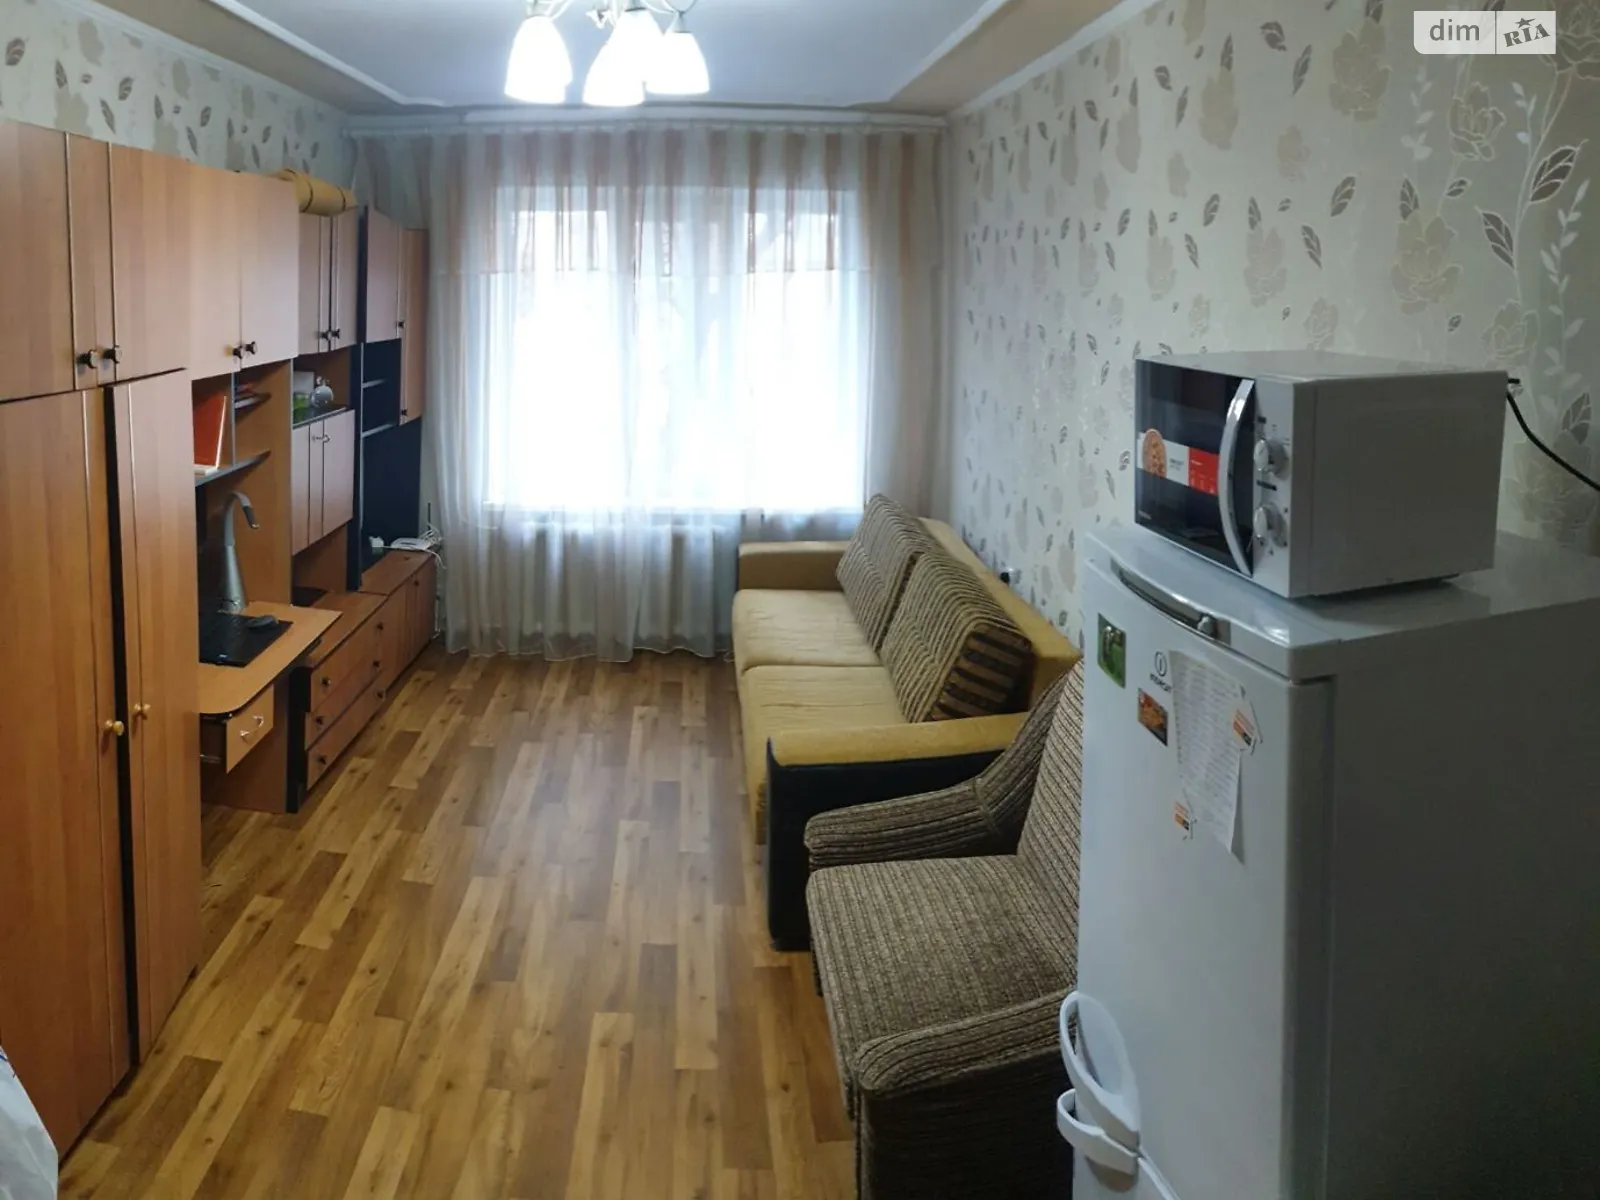 Продается комната 31.2 кв. м в Одессе, цена: 11000 $ - фото 1